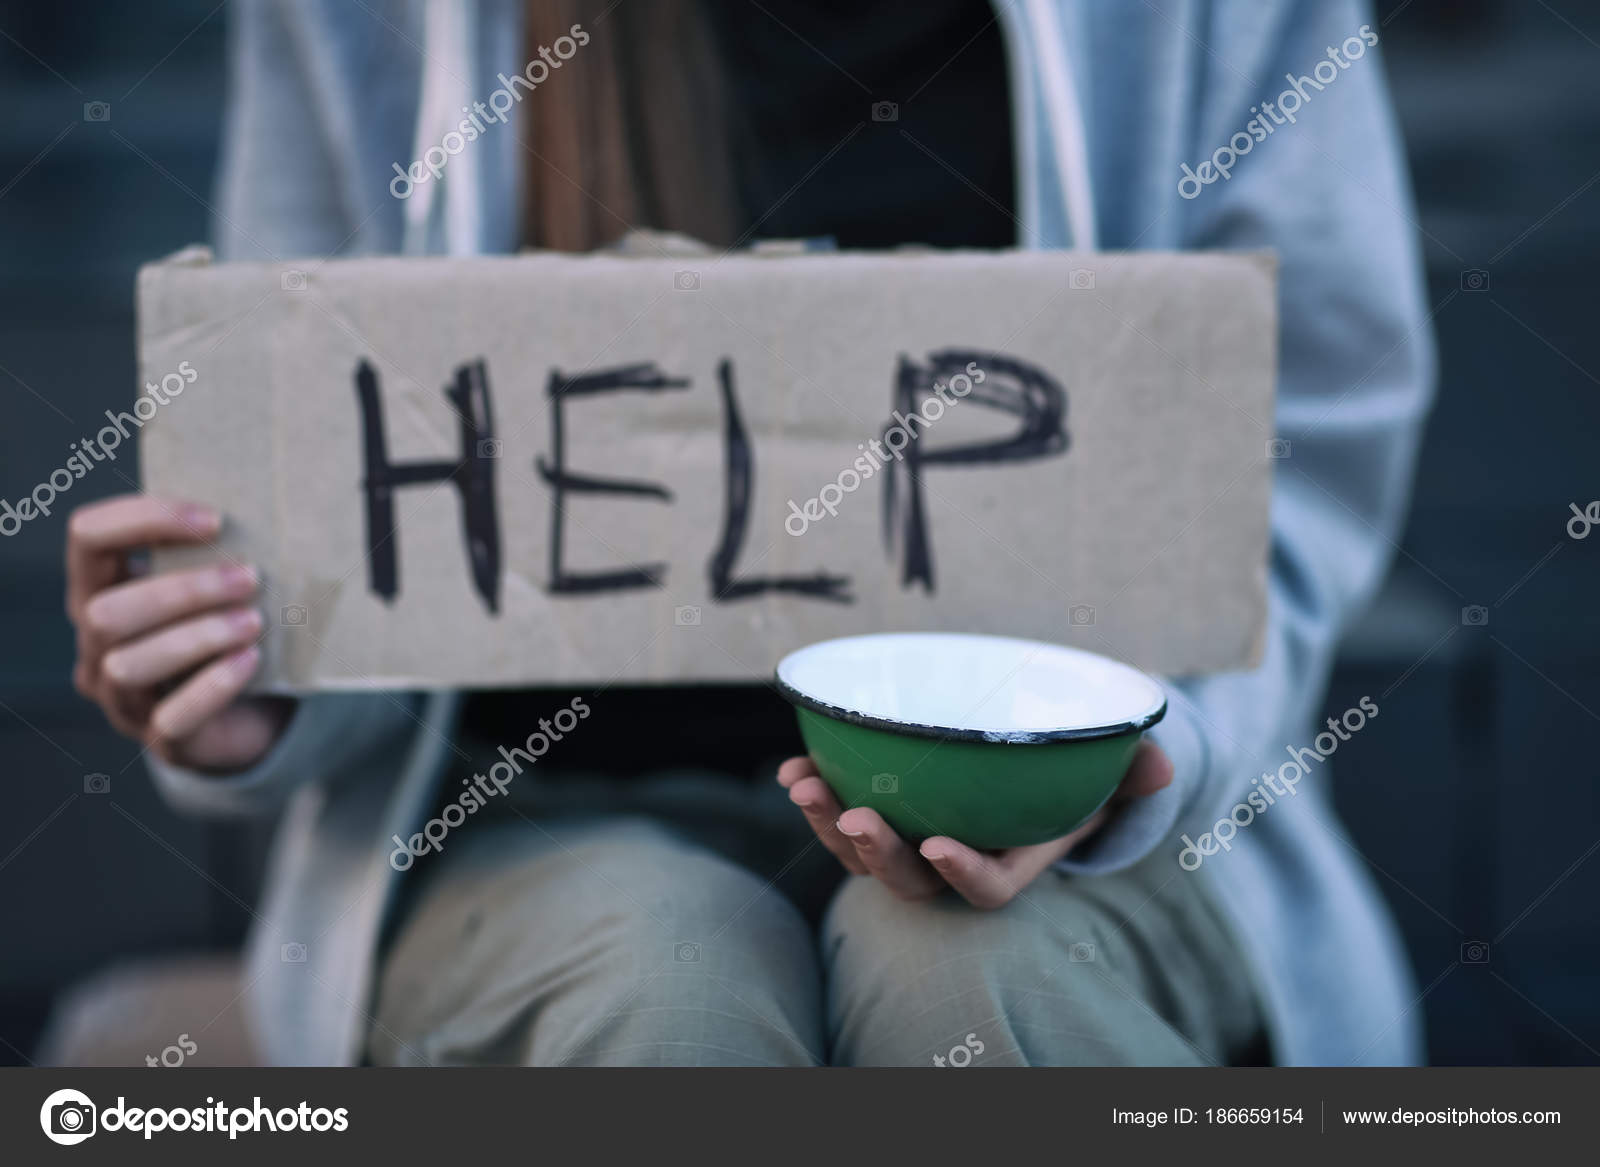 depositphotos_186659154-stock-photo-homeless-poor-woman-holding-empty.jpg